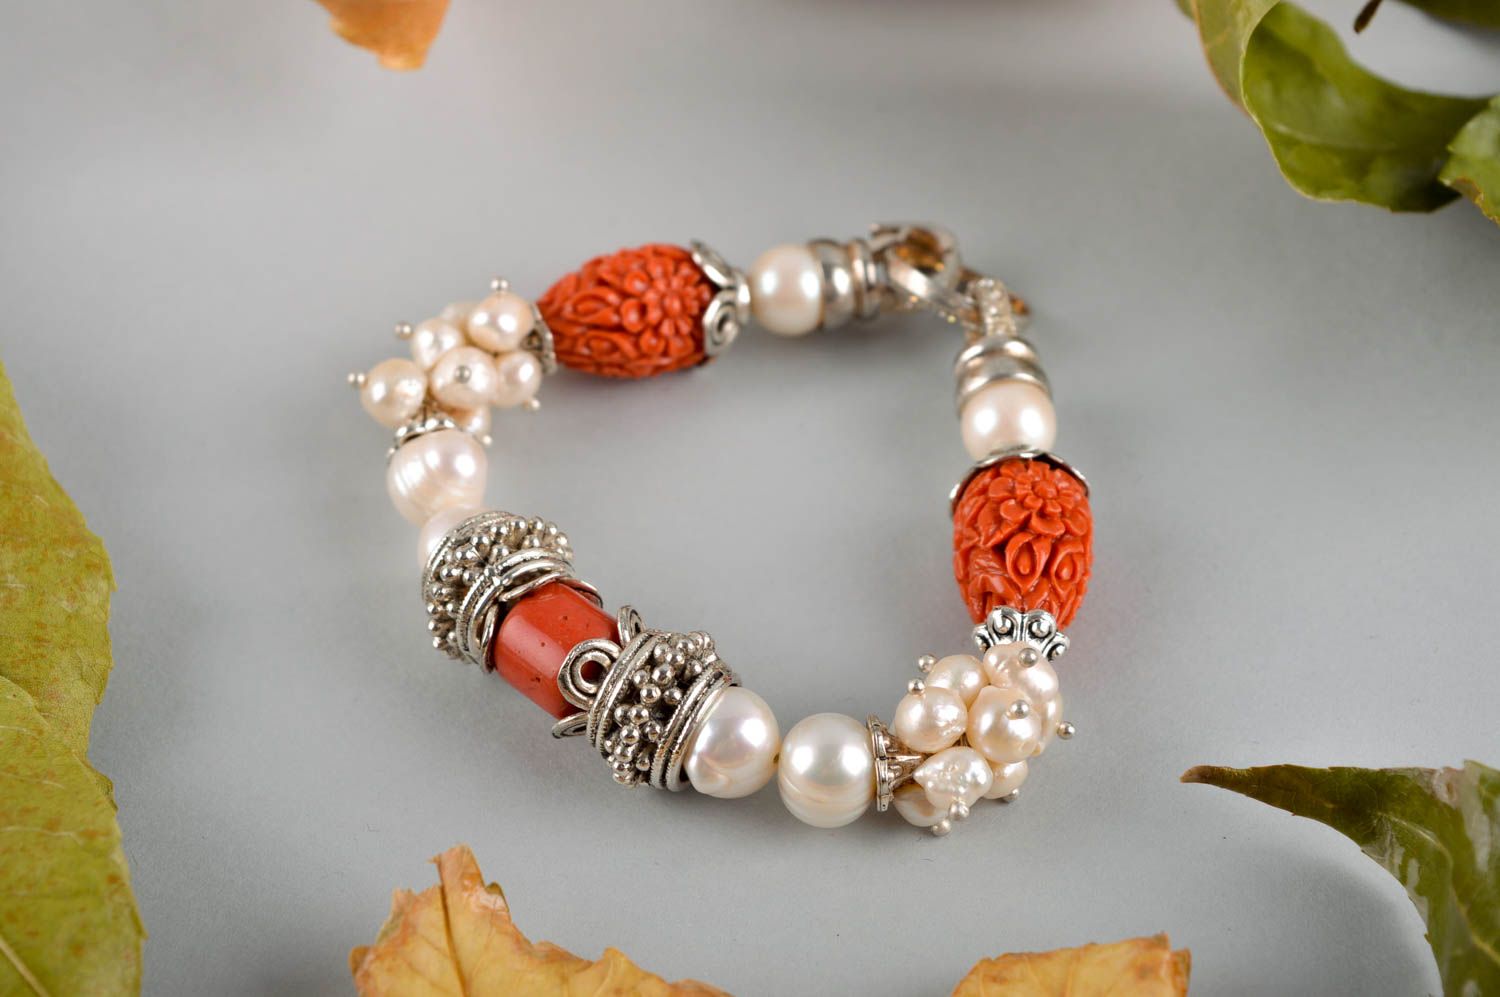 Handmade stylish cute bracelet unusual wrist bracelet natural stone jewelry photo 1